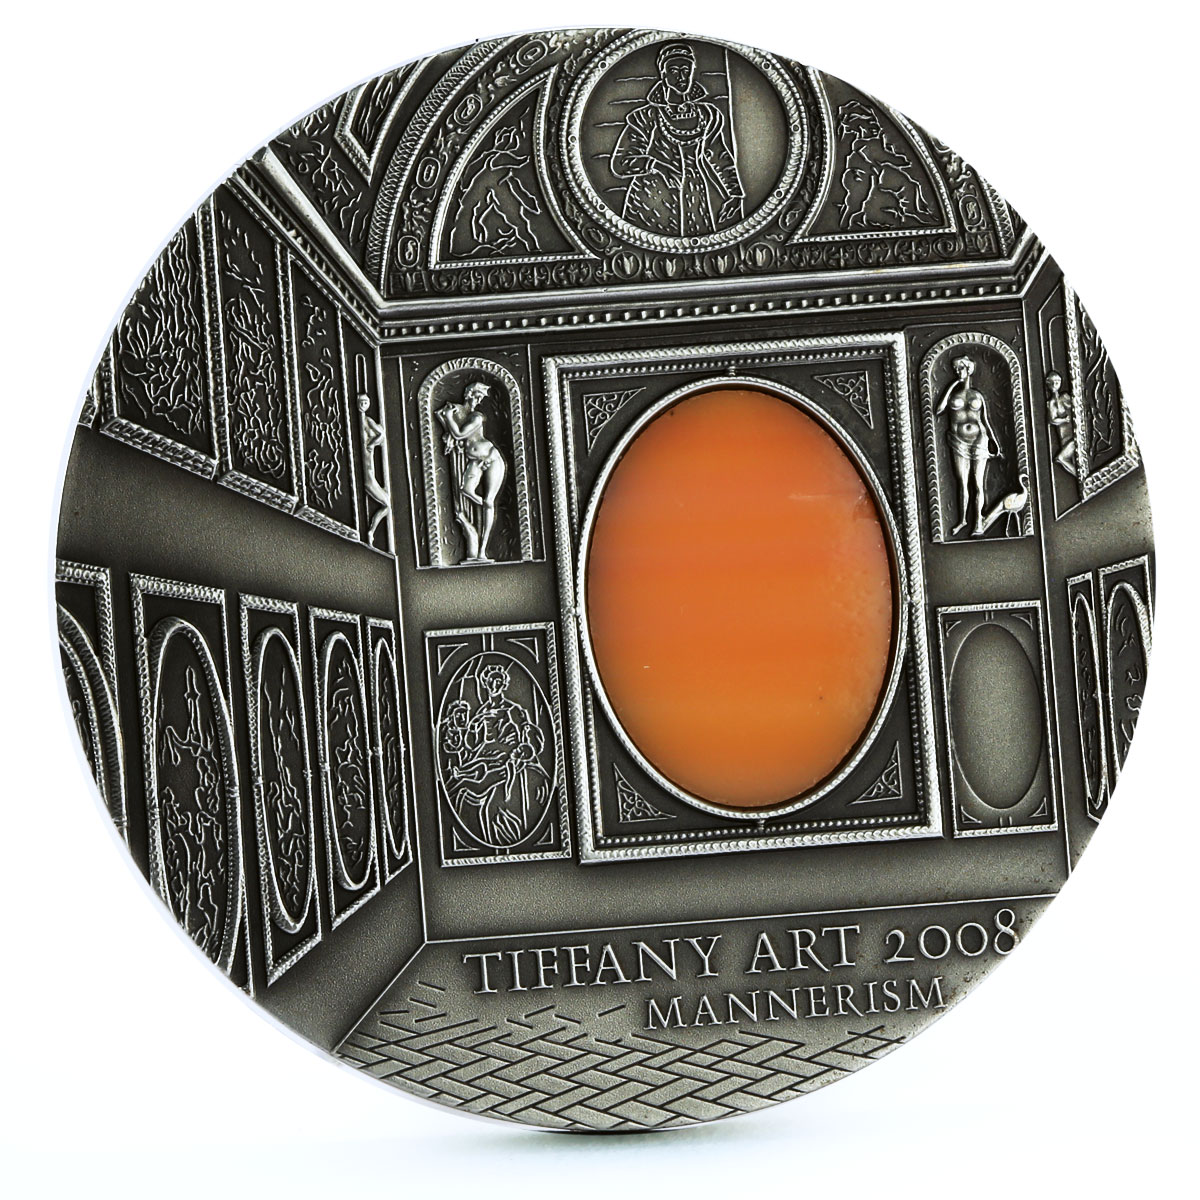 Palau 10 dollars Tiffany Art Masterpieces Mannerism Renaissance silver coin 2008